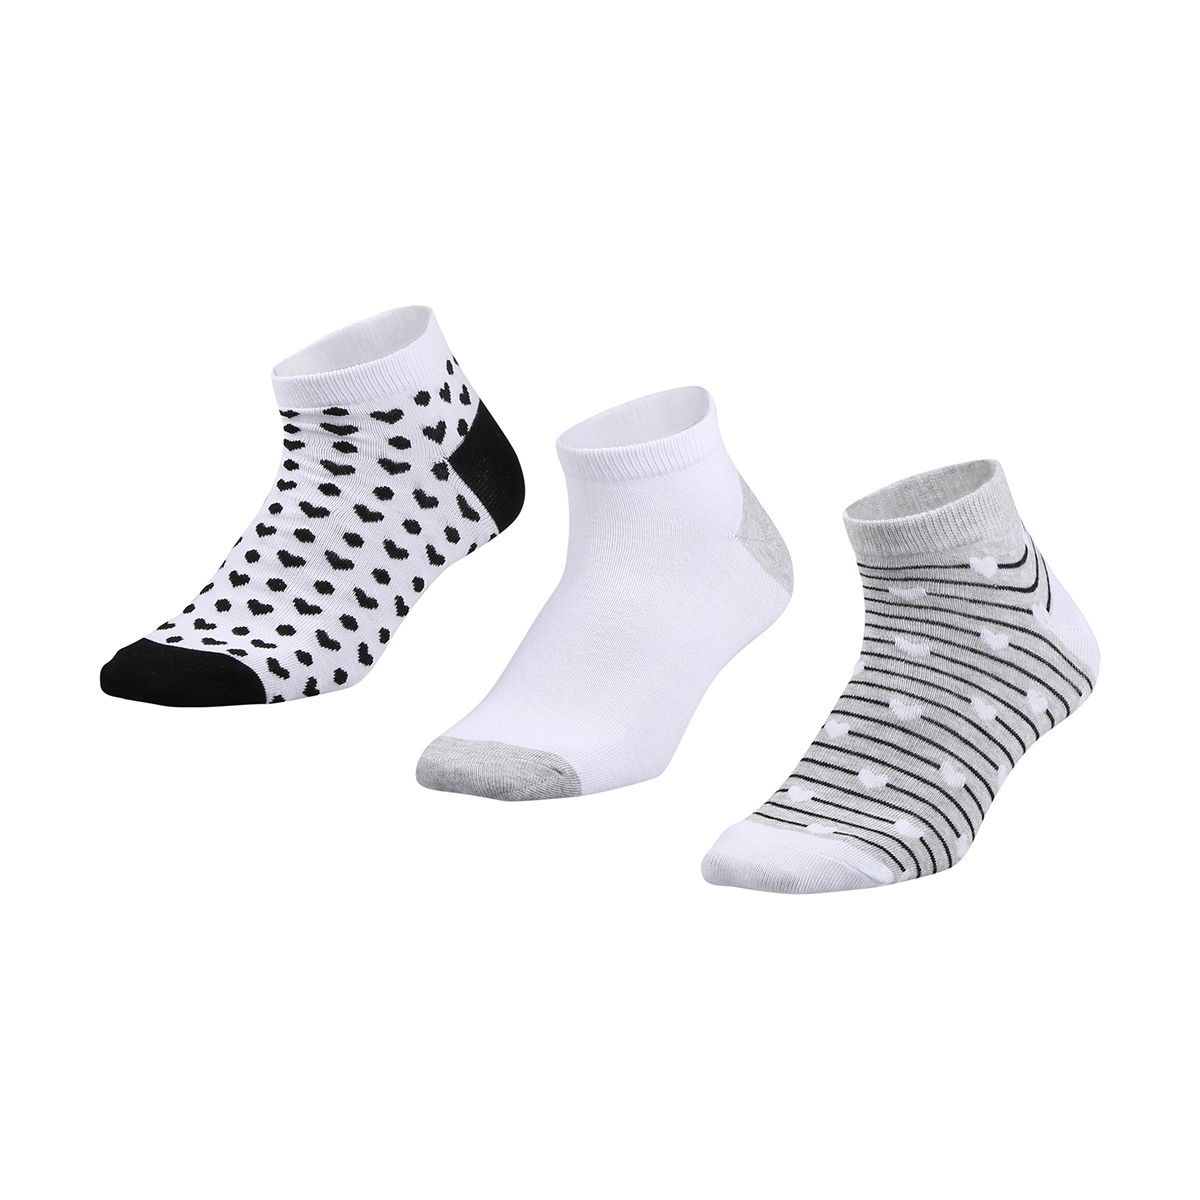 3 Pack Low Cut Socks | Kmart